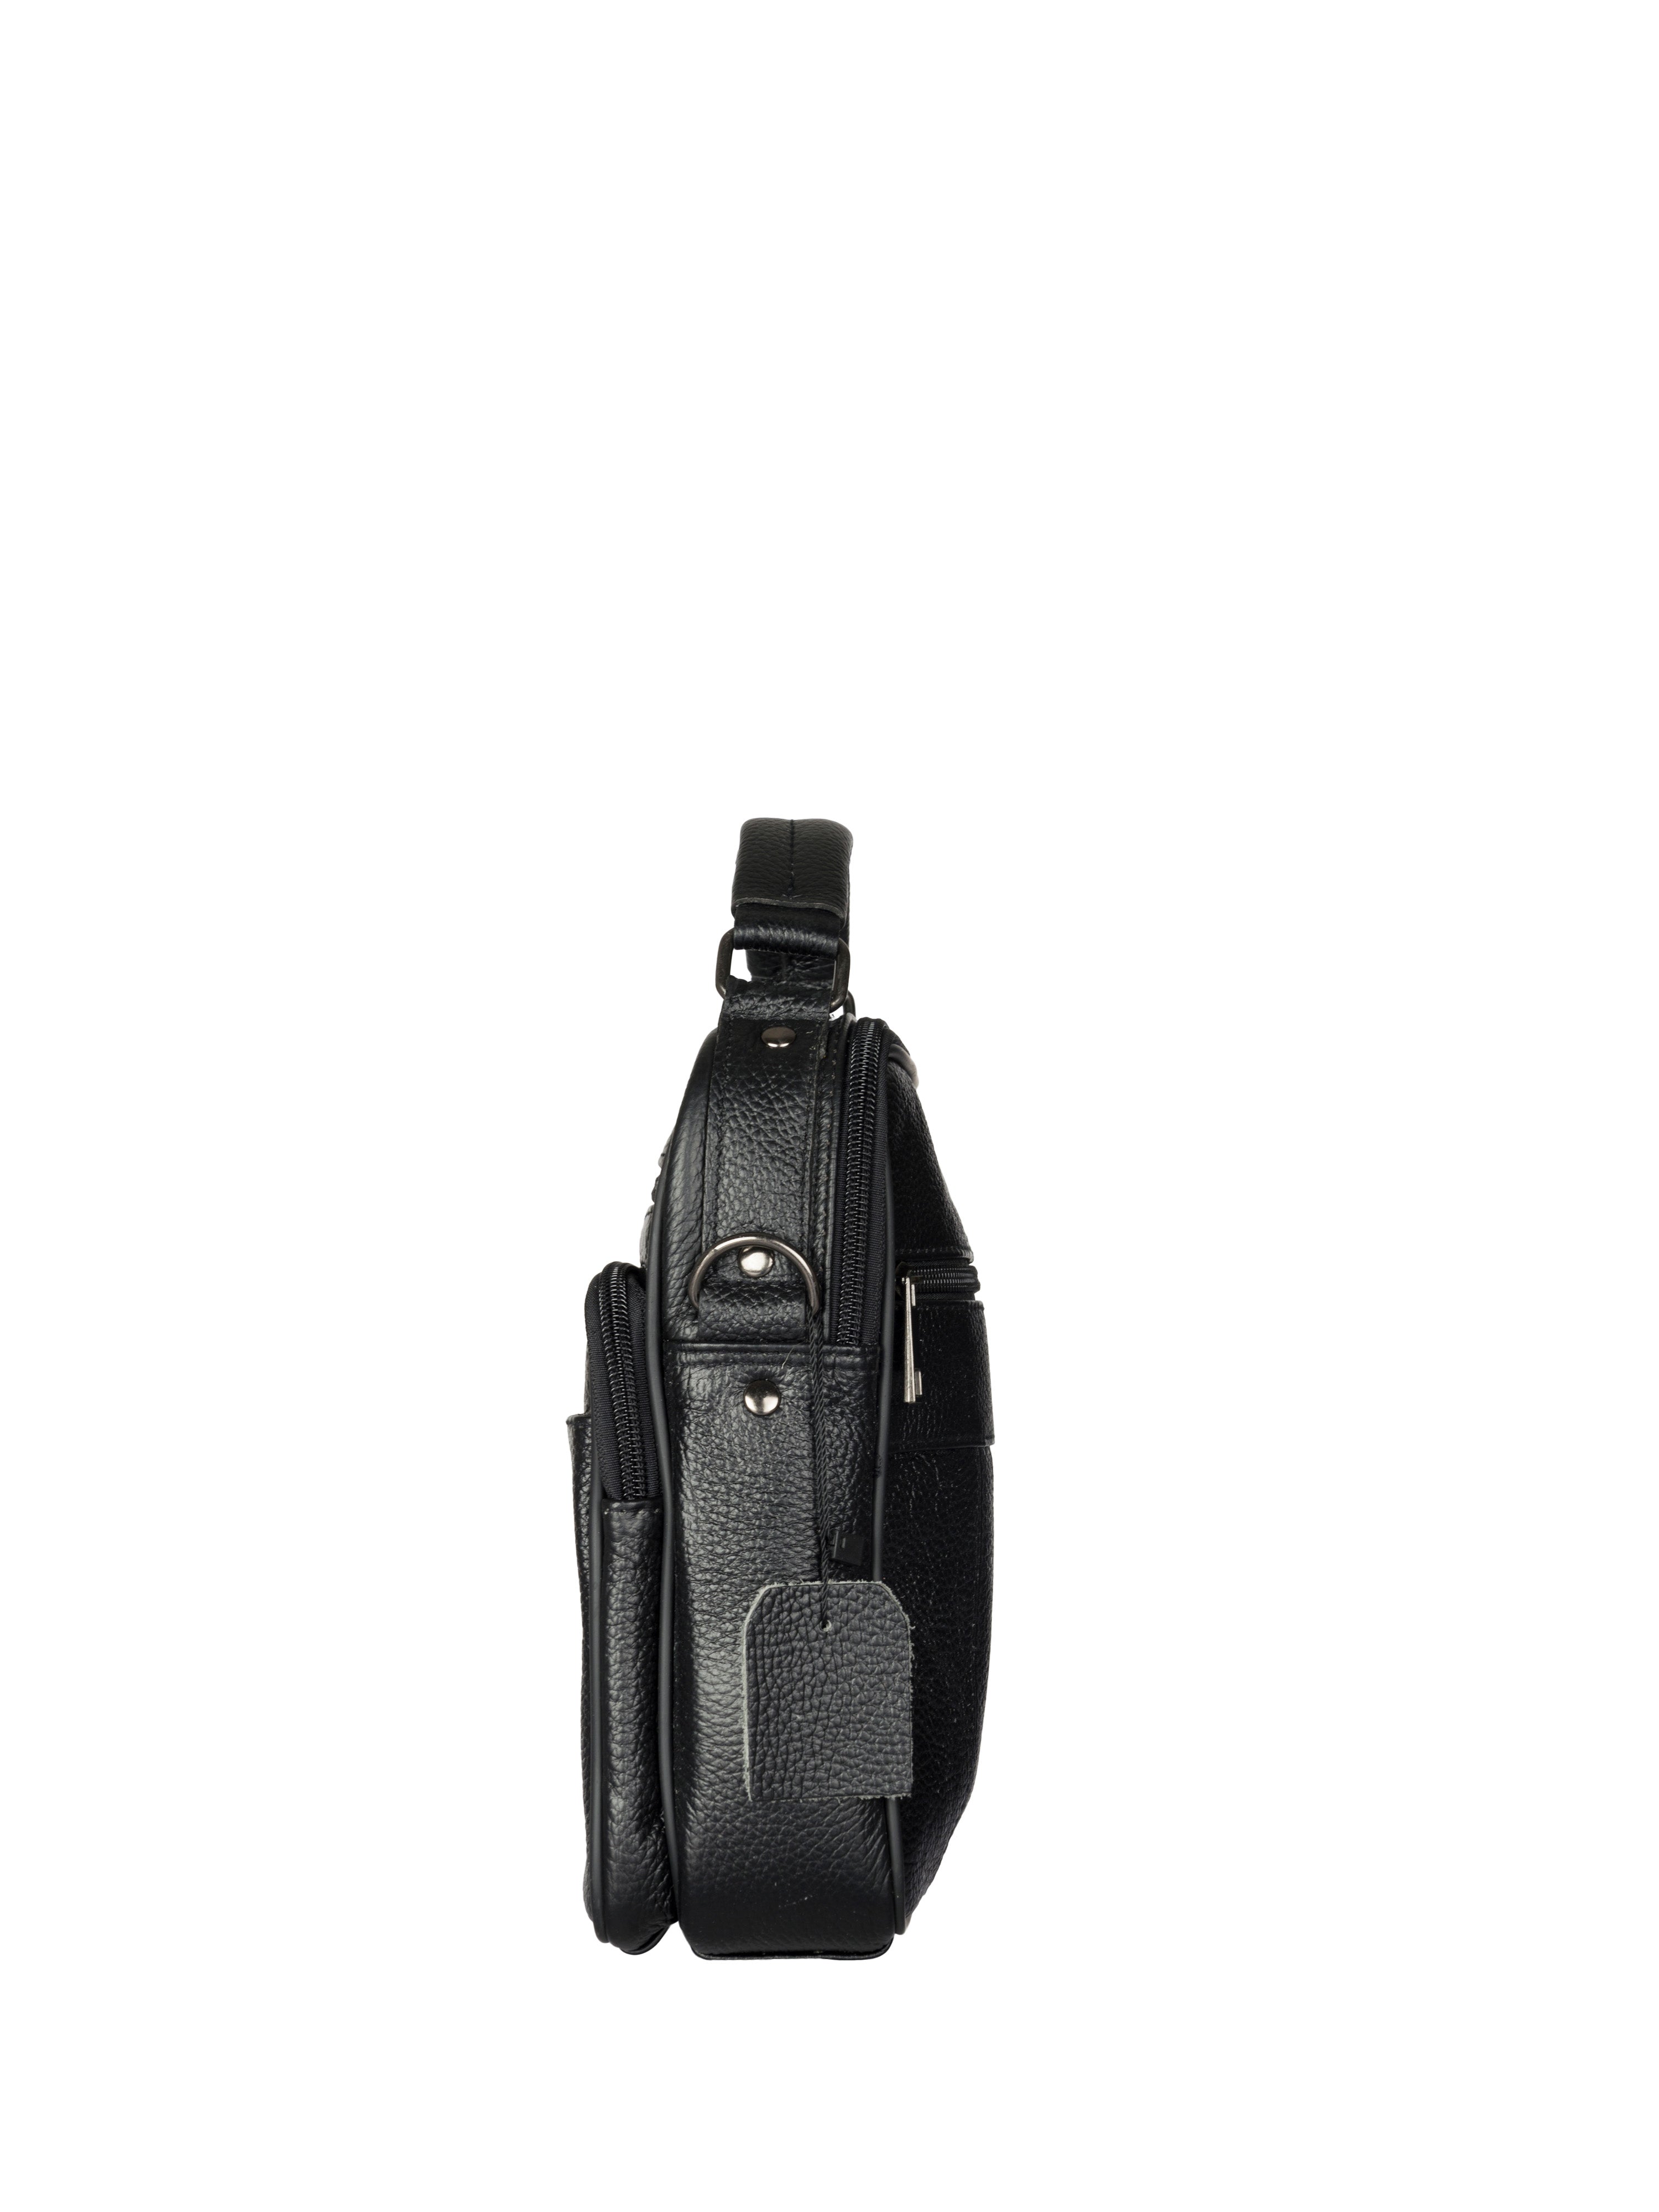 Bulchee Unisex Black Sling Bag  - TMHBLD5029.1-18